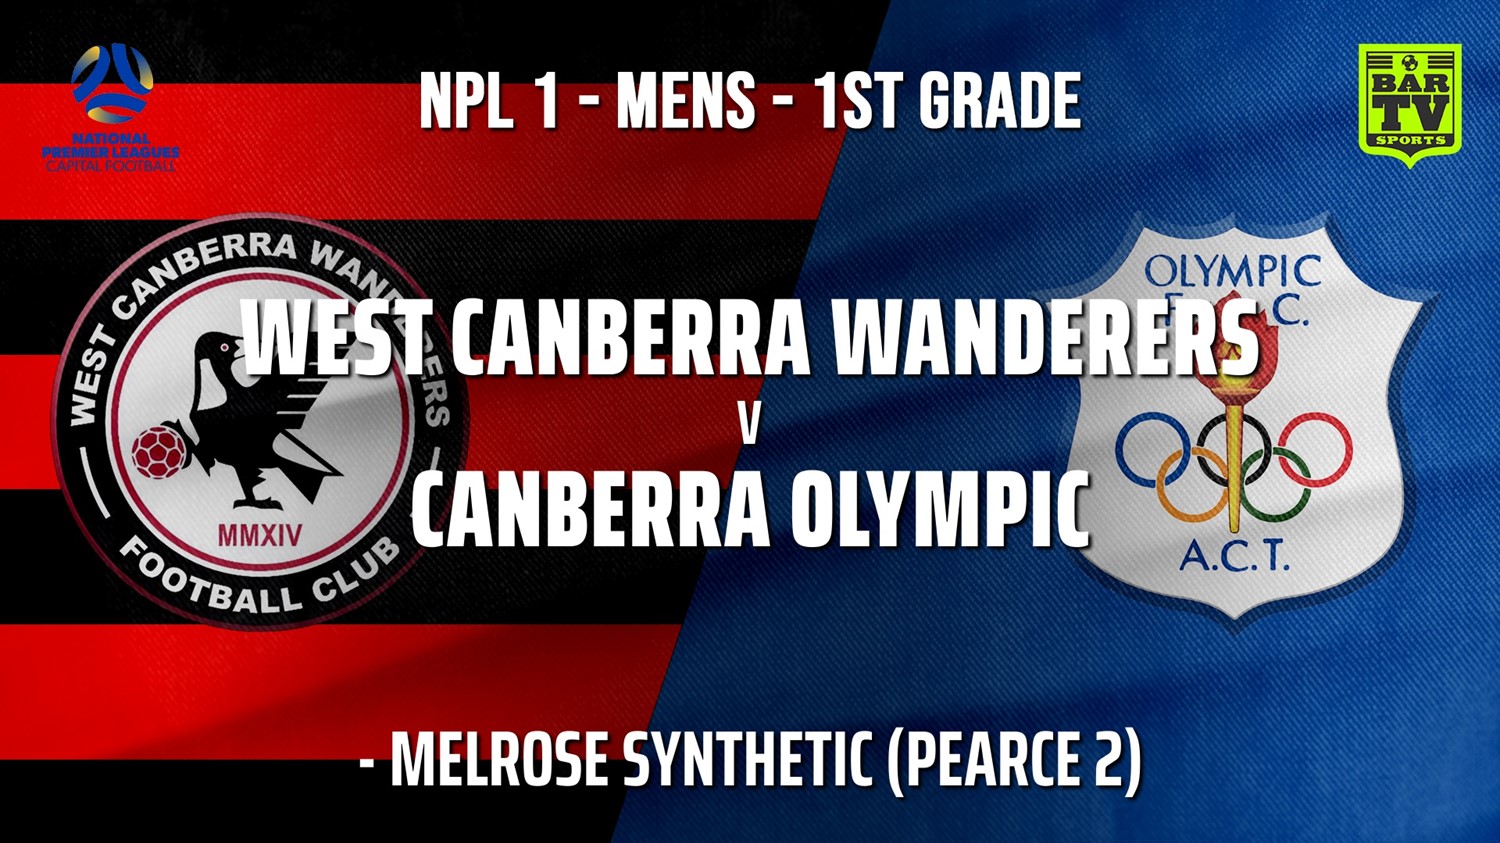 210501-NPL - CAPITAL West Canberra Wanderers v Canberra Olympic FC Minigame Slate Image